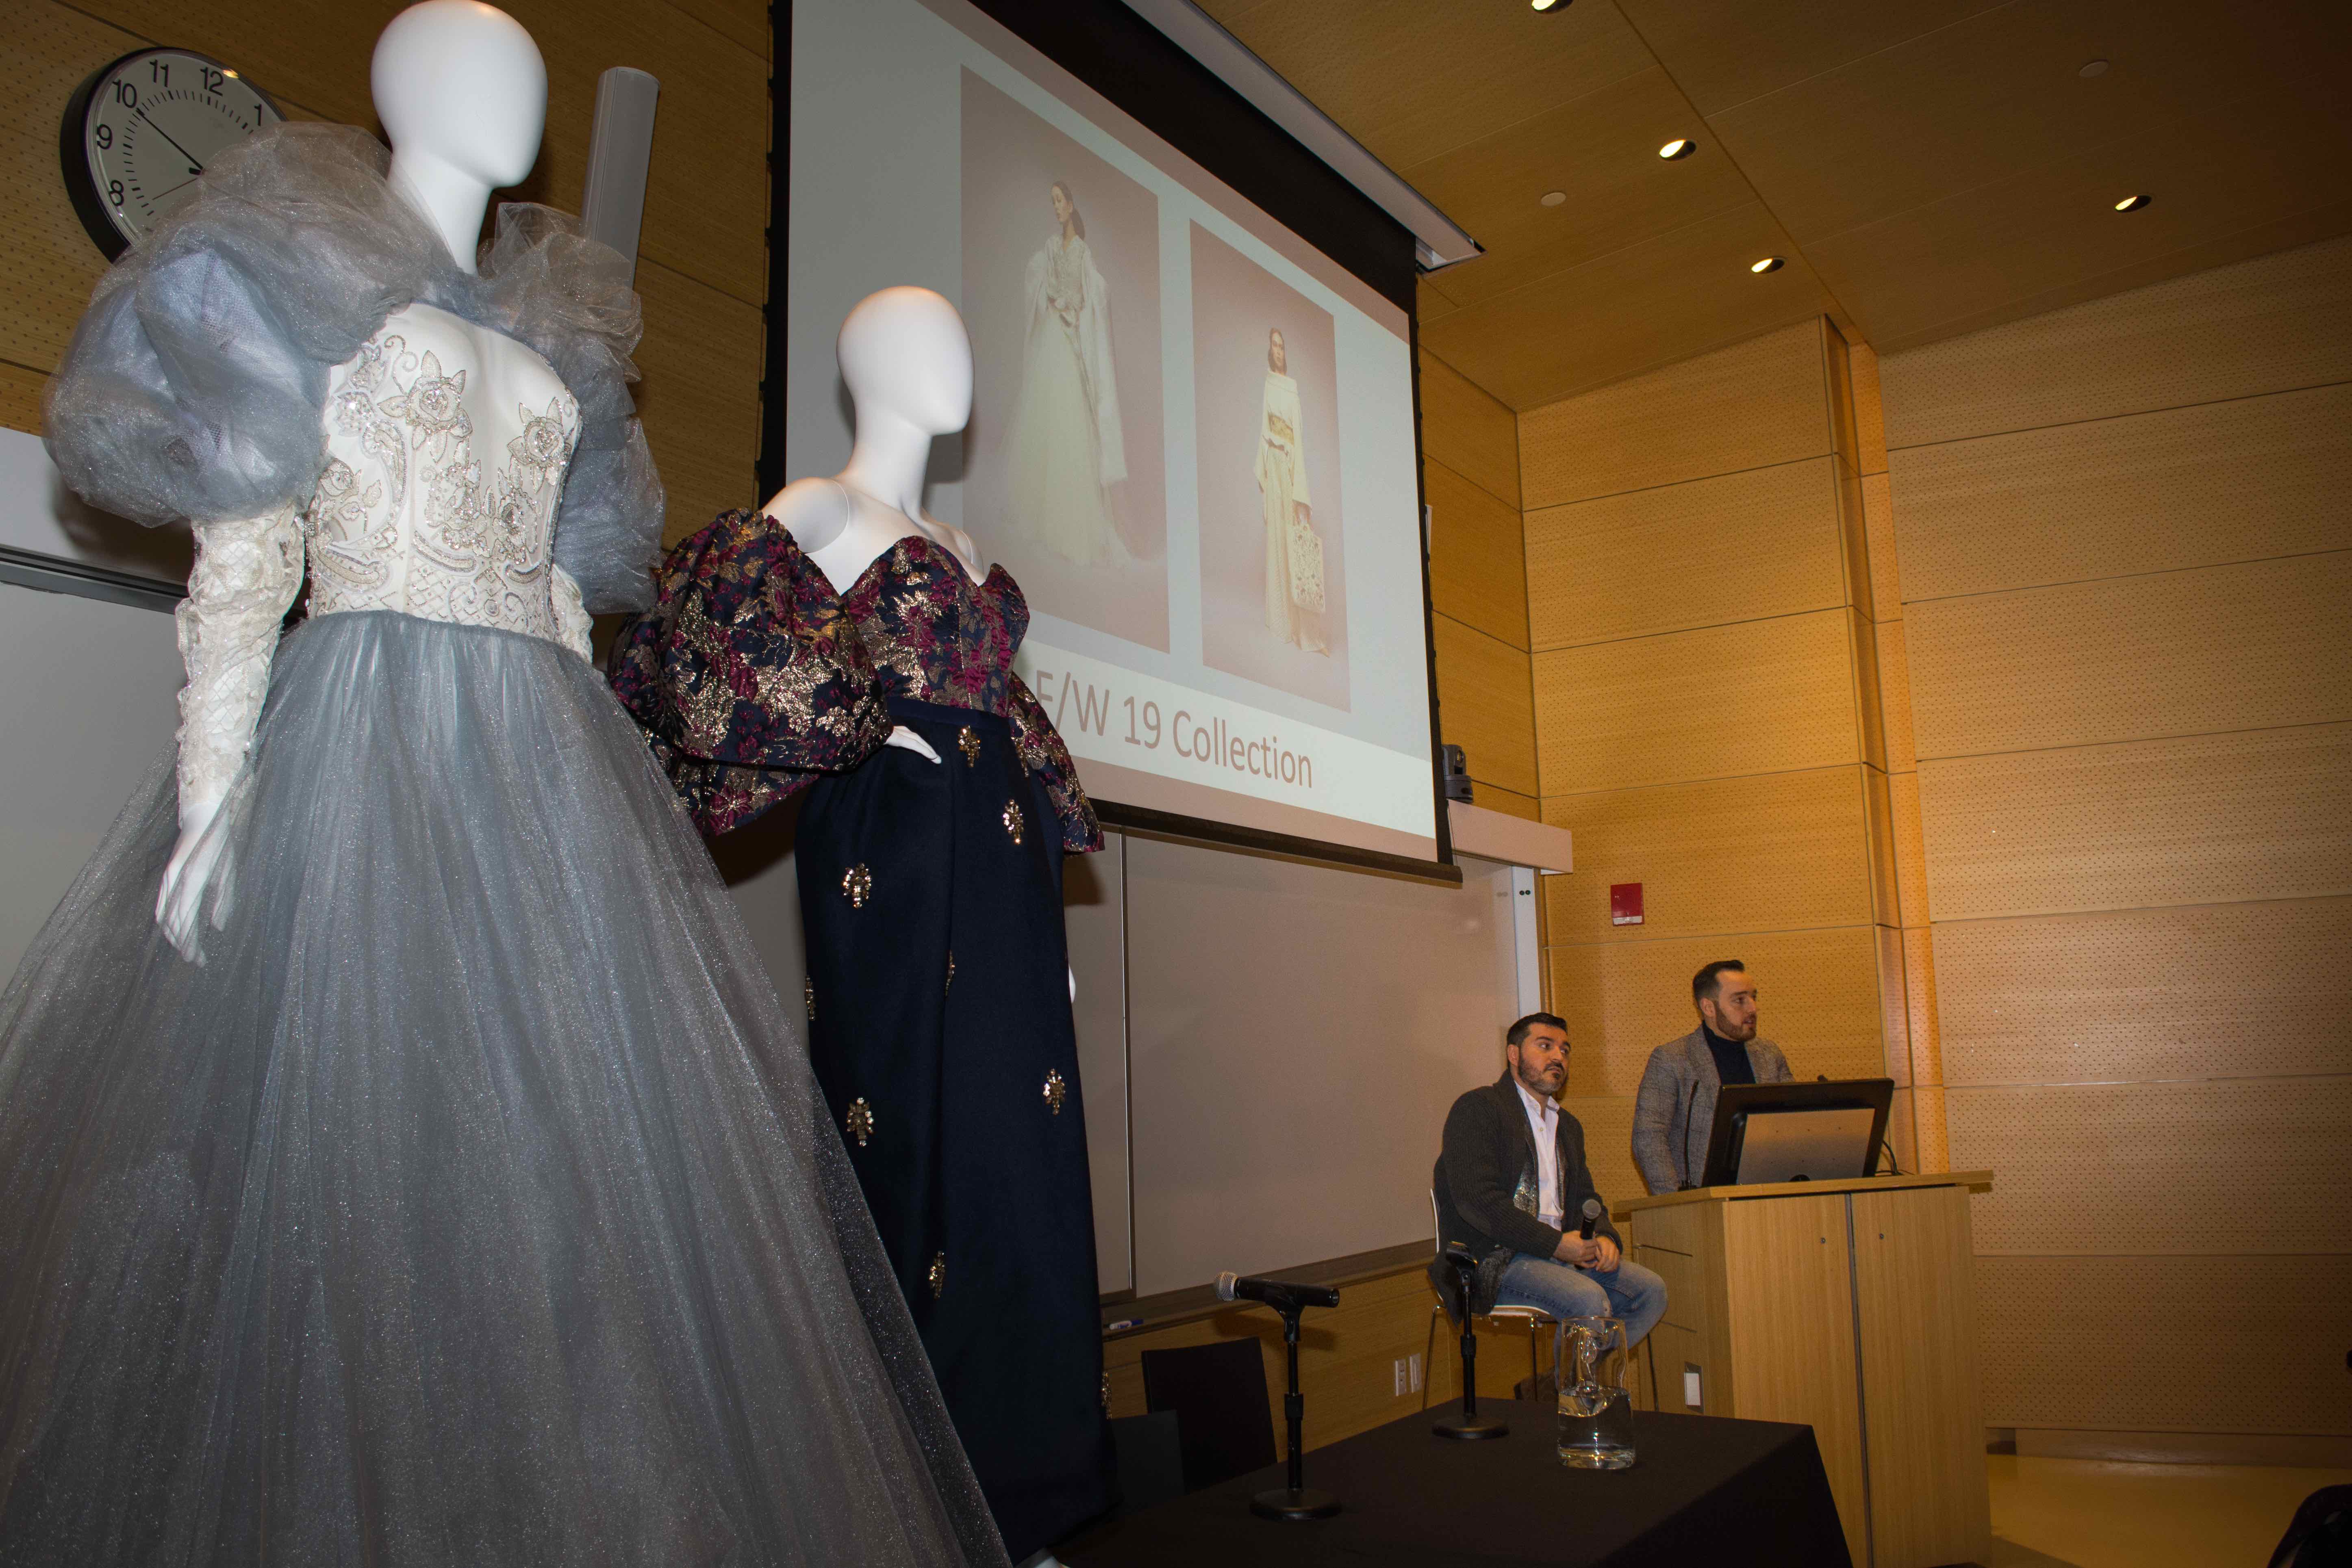 Kade Johnson and Sergio Guadarrama (fashion designers, Celestino), speaking about their dresses